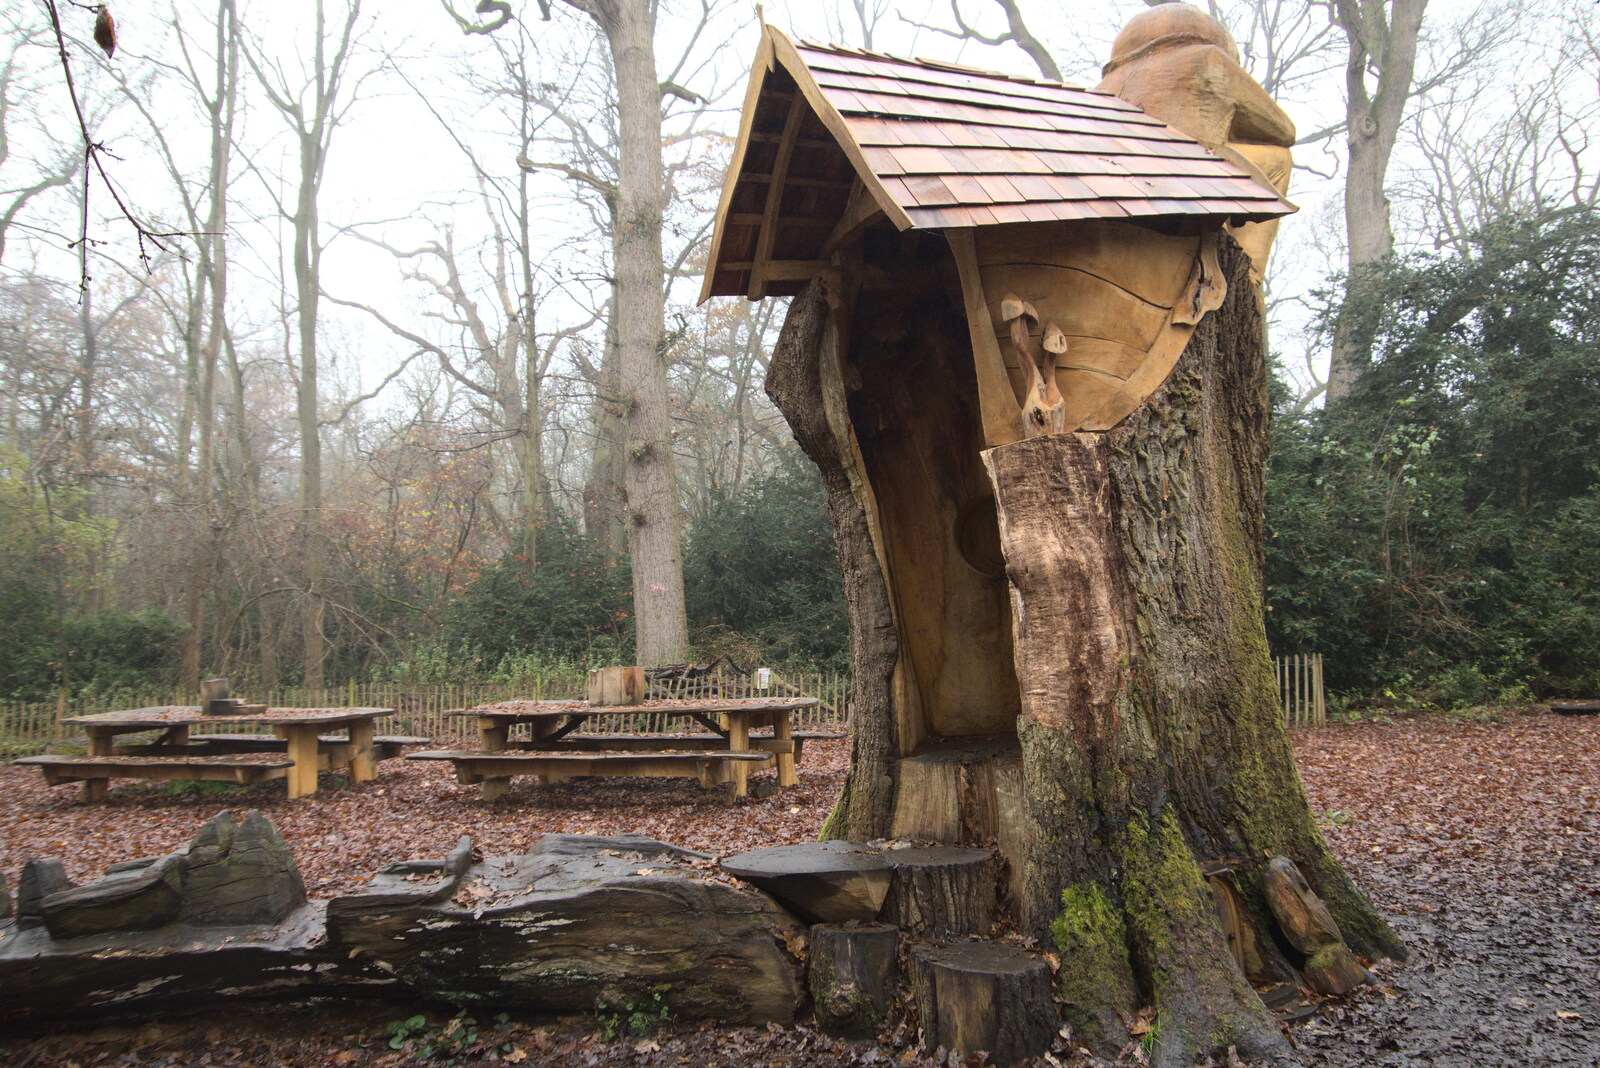 The fallen tree has been turned into a hut from A Return to Thornham Walks, Thornham, Suffolk - 19th December 2021